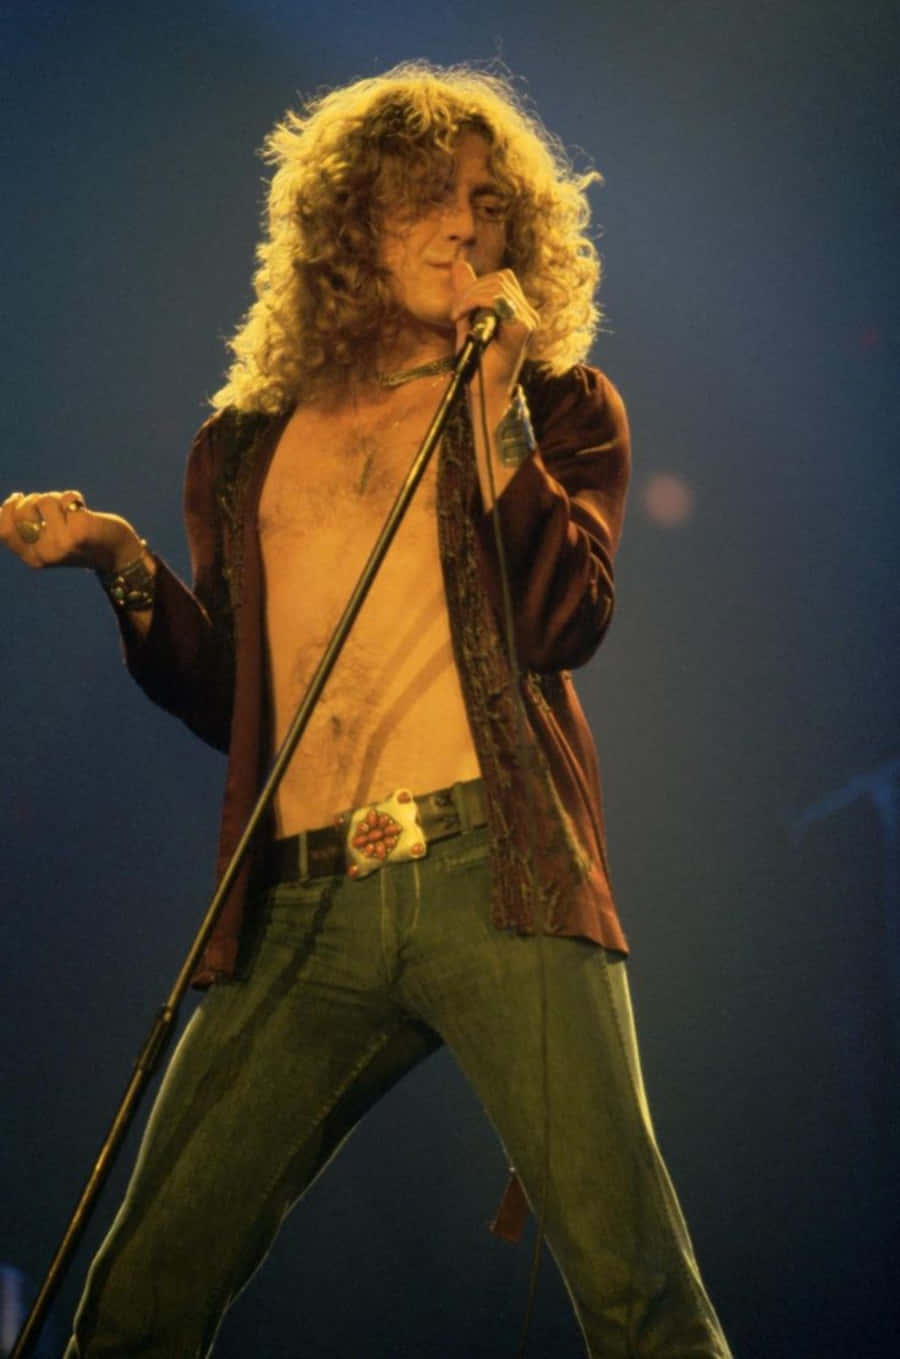 Imagende Robert Plant, Ex Cantante De Led Zeppelin.